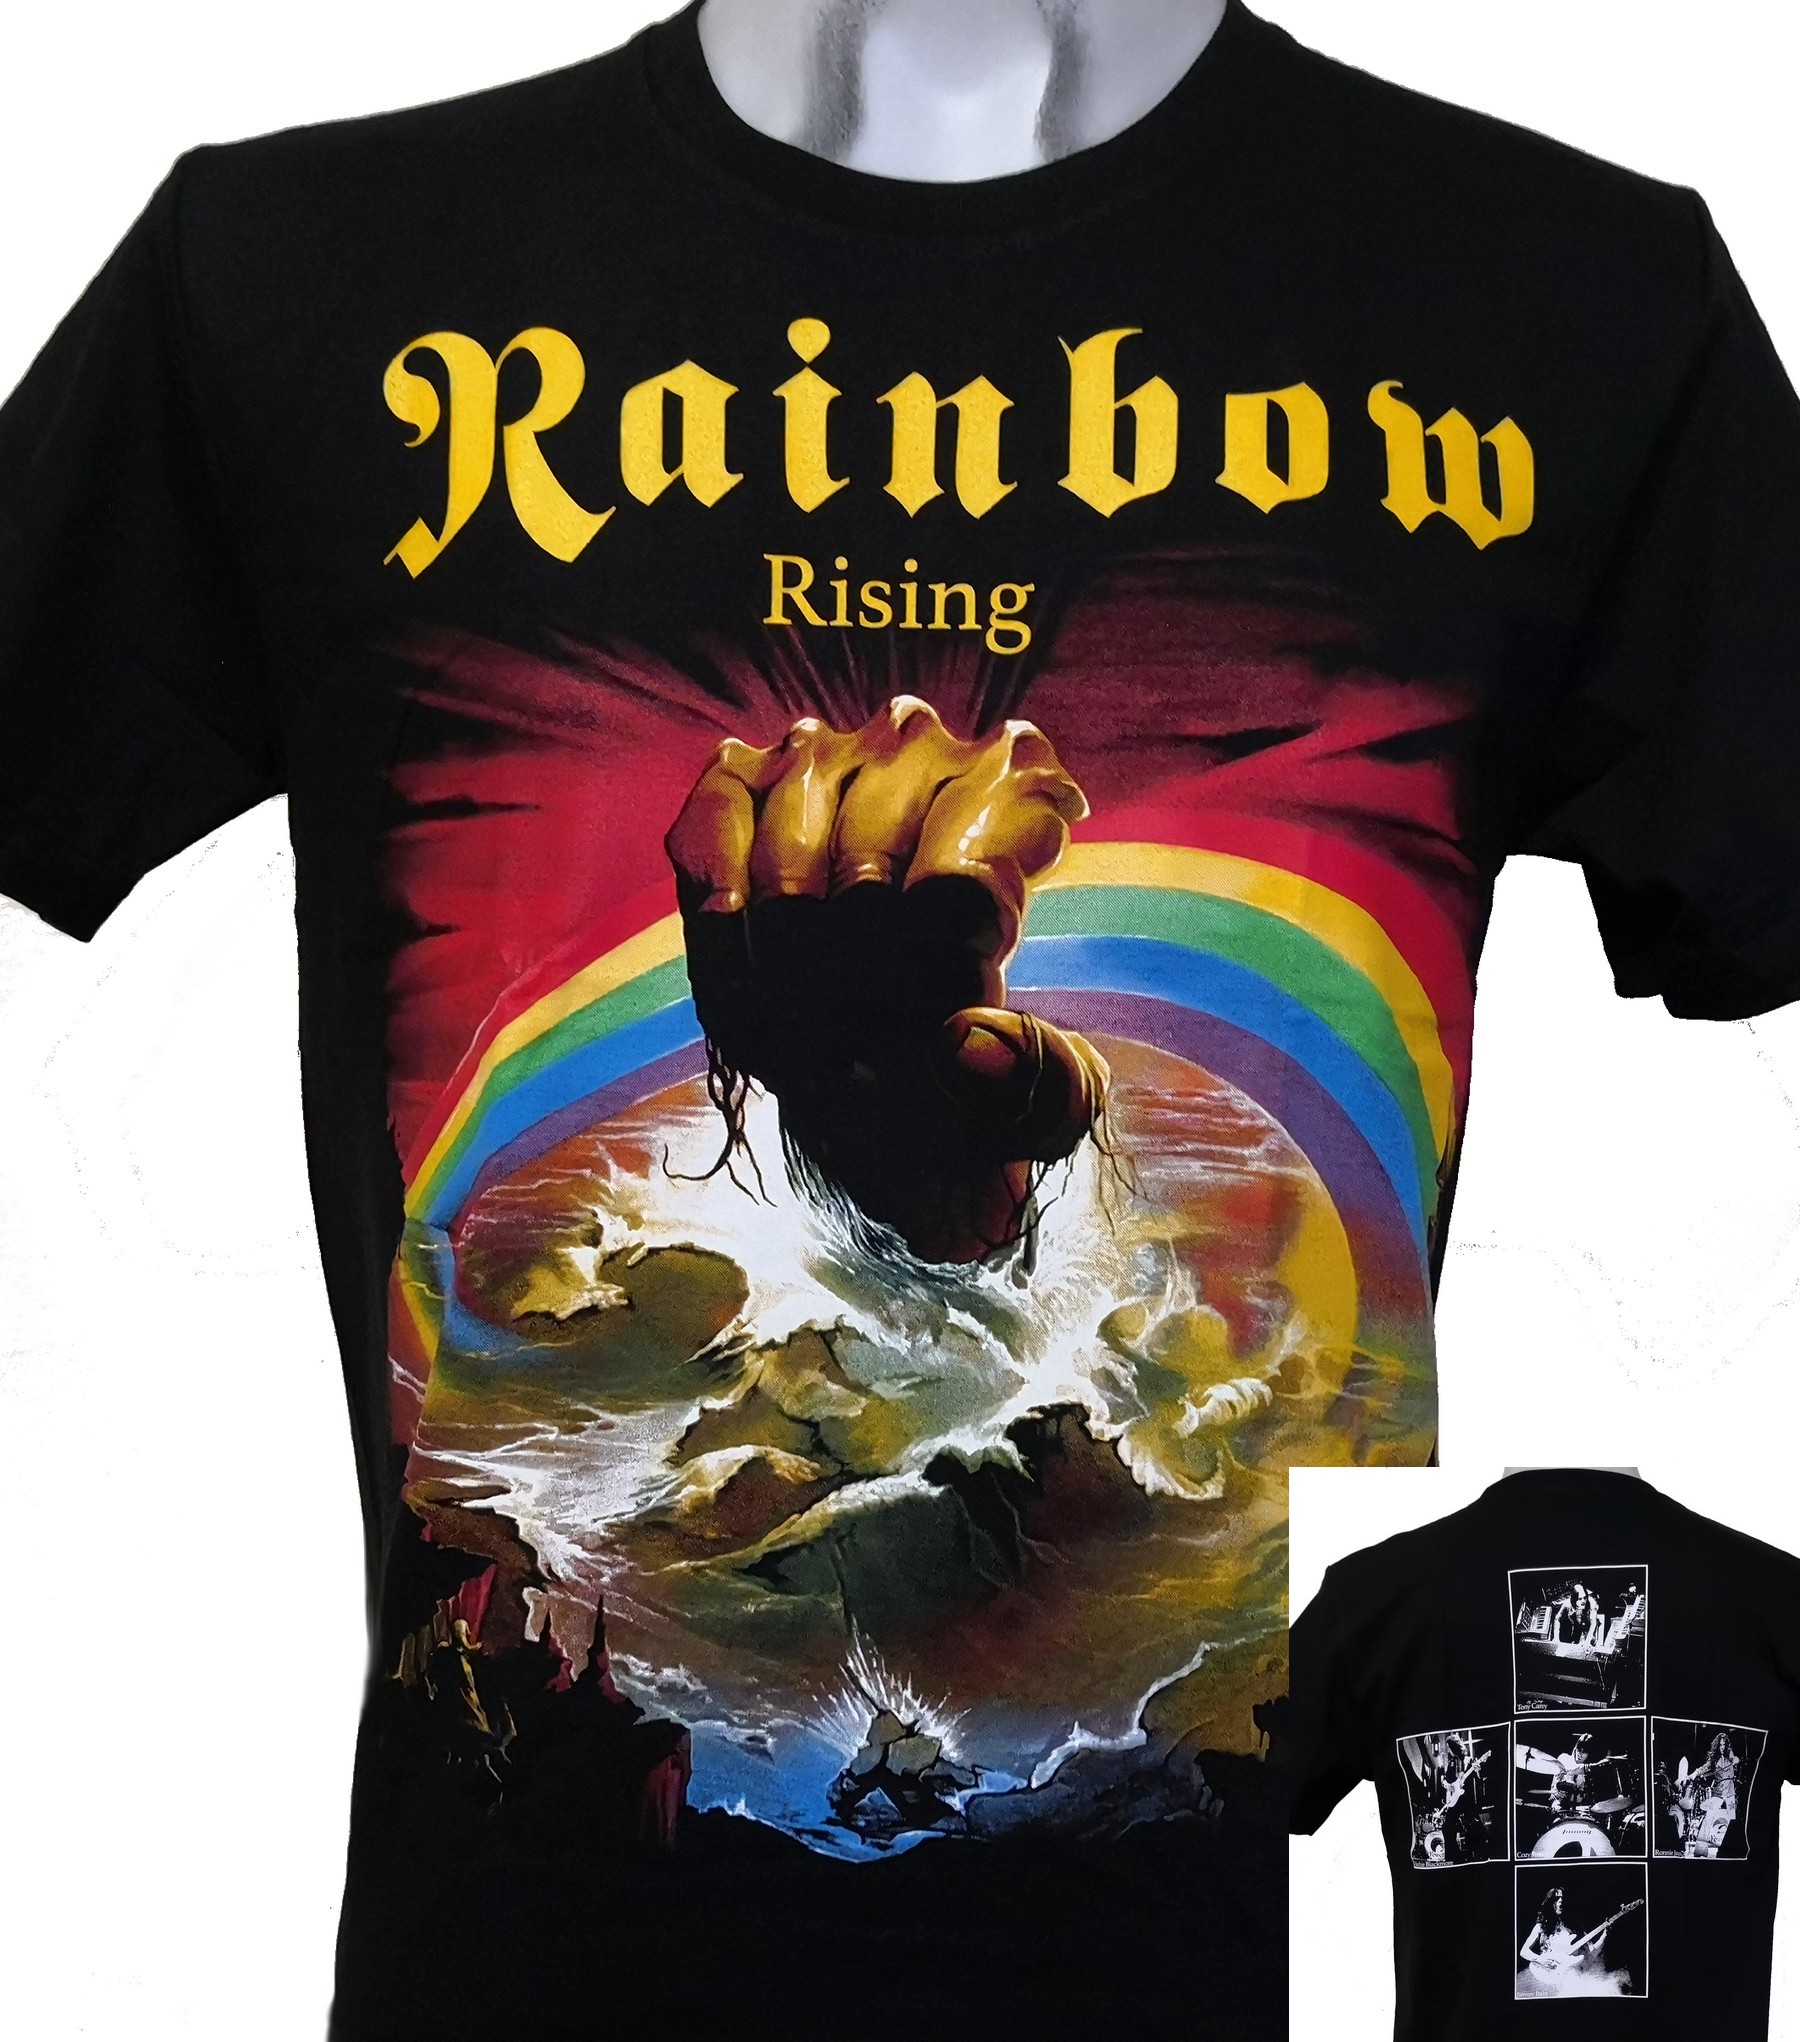 – Rainbow t-shirt size Rising RoxxBKK S